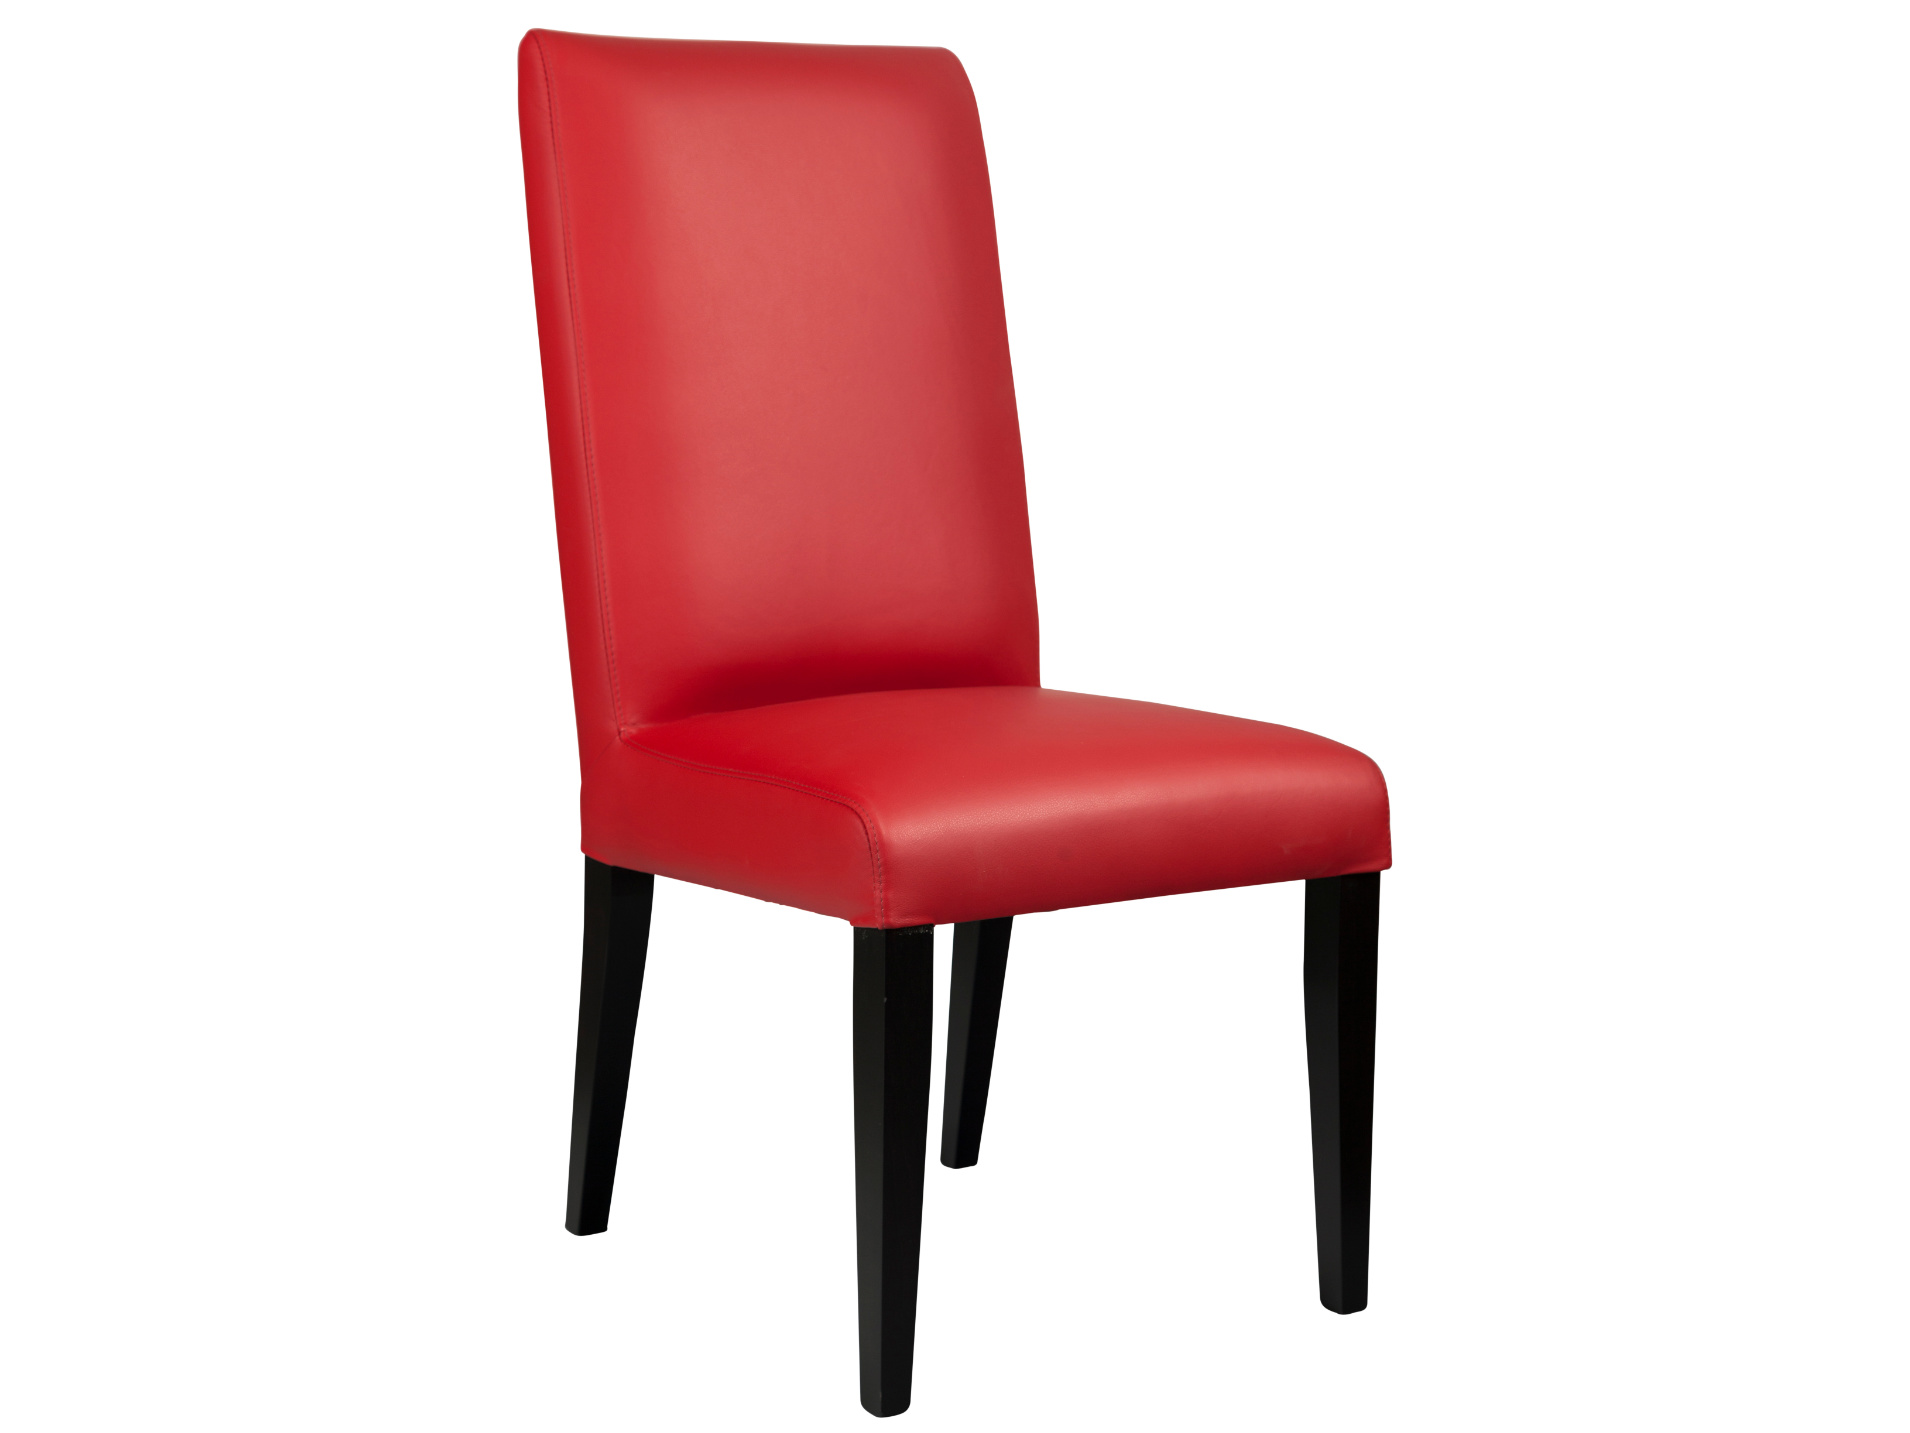 55. V-Back Parson Chair